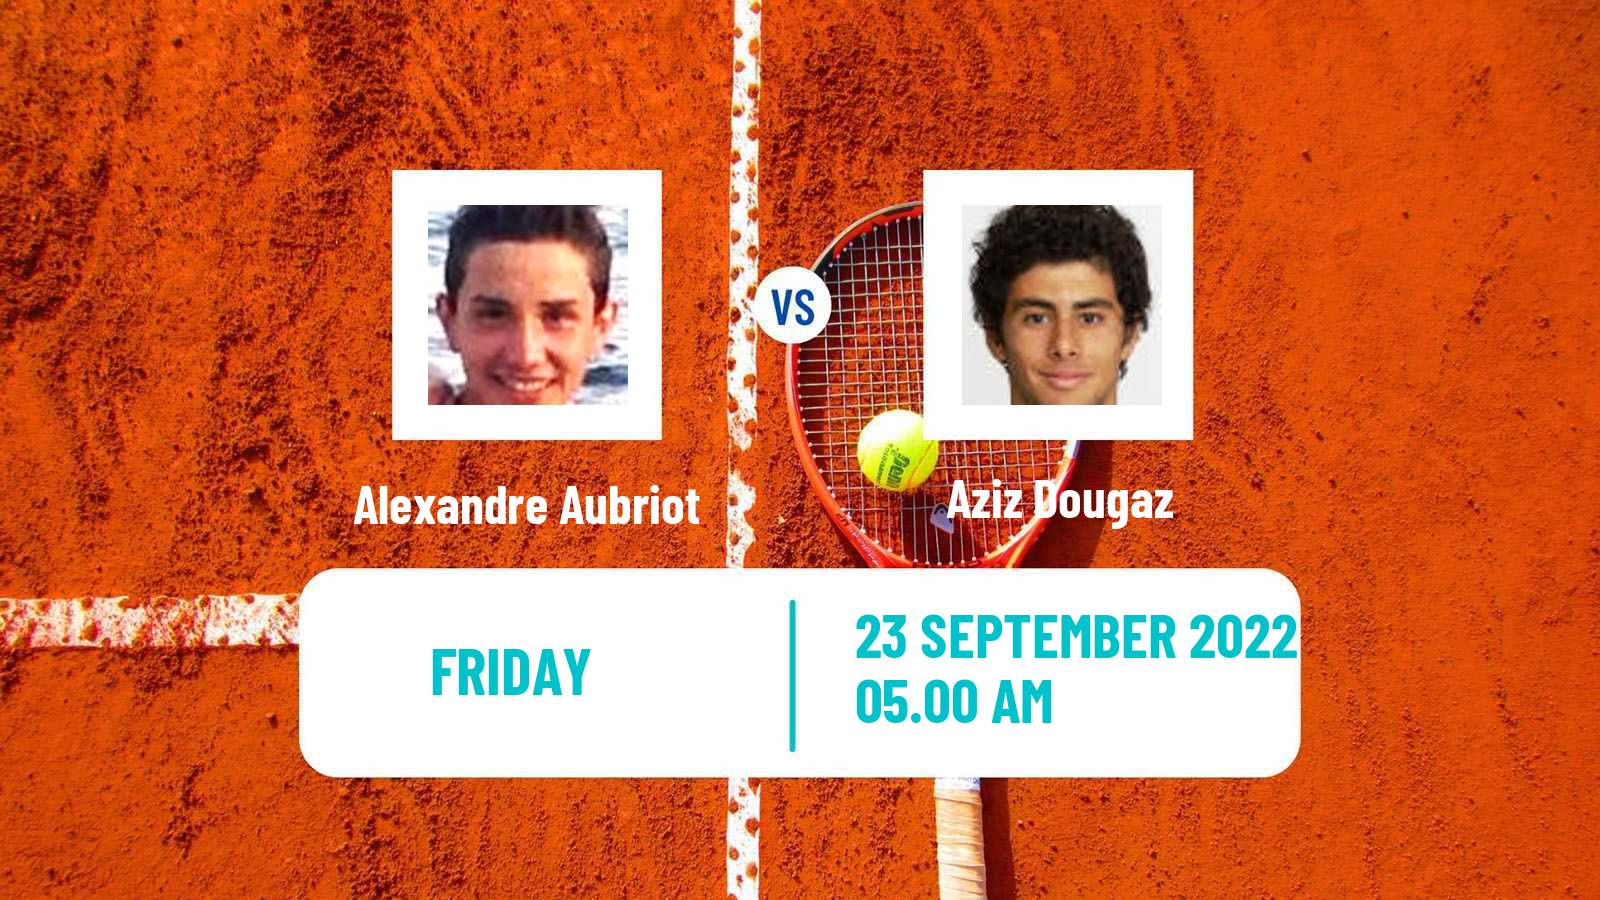 Tennis ITF Tournaments Alexandre Aubriot - Aziz Dougaz